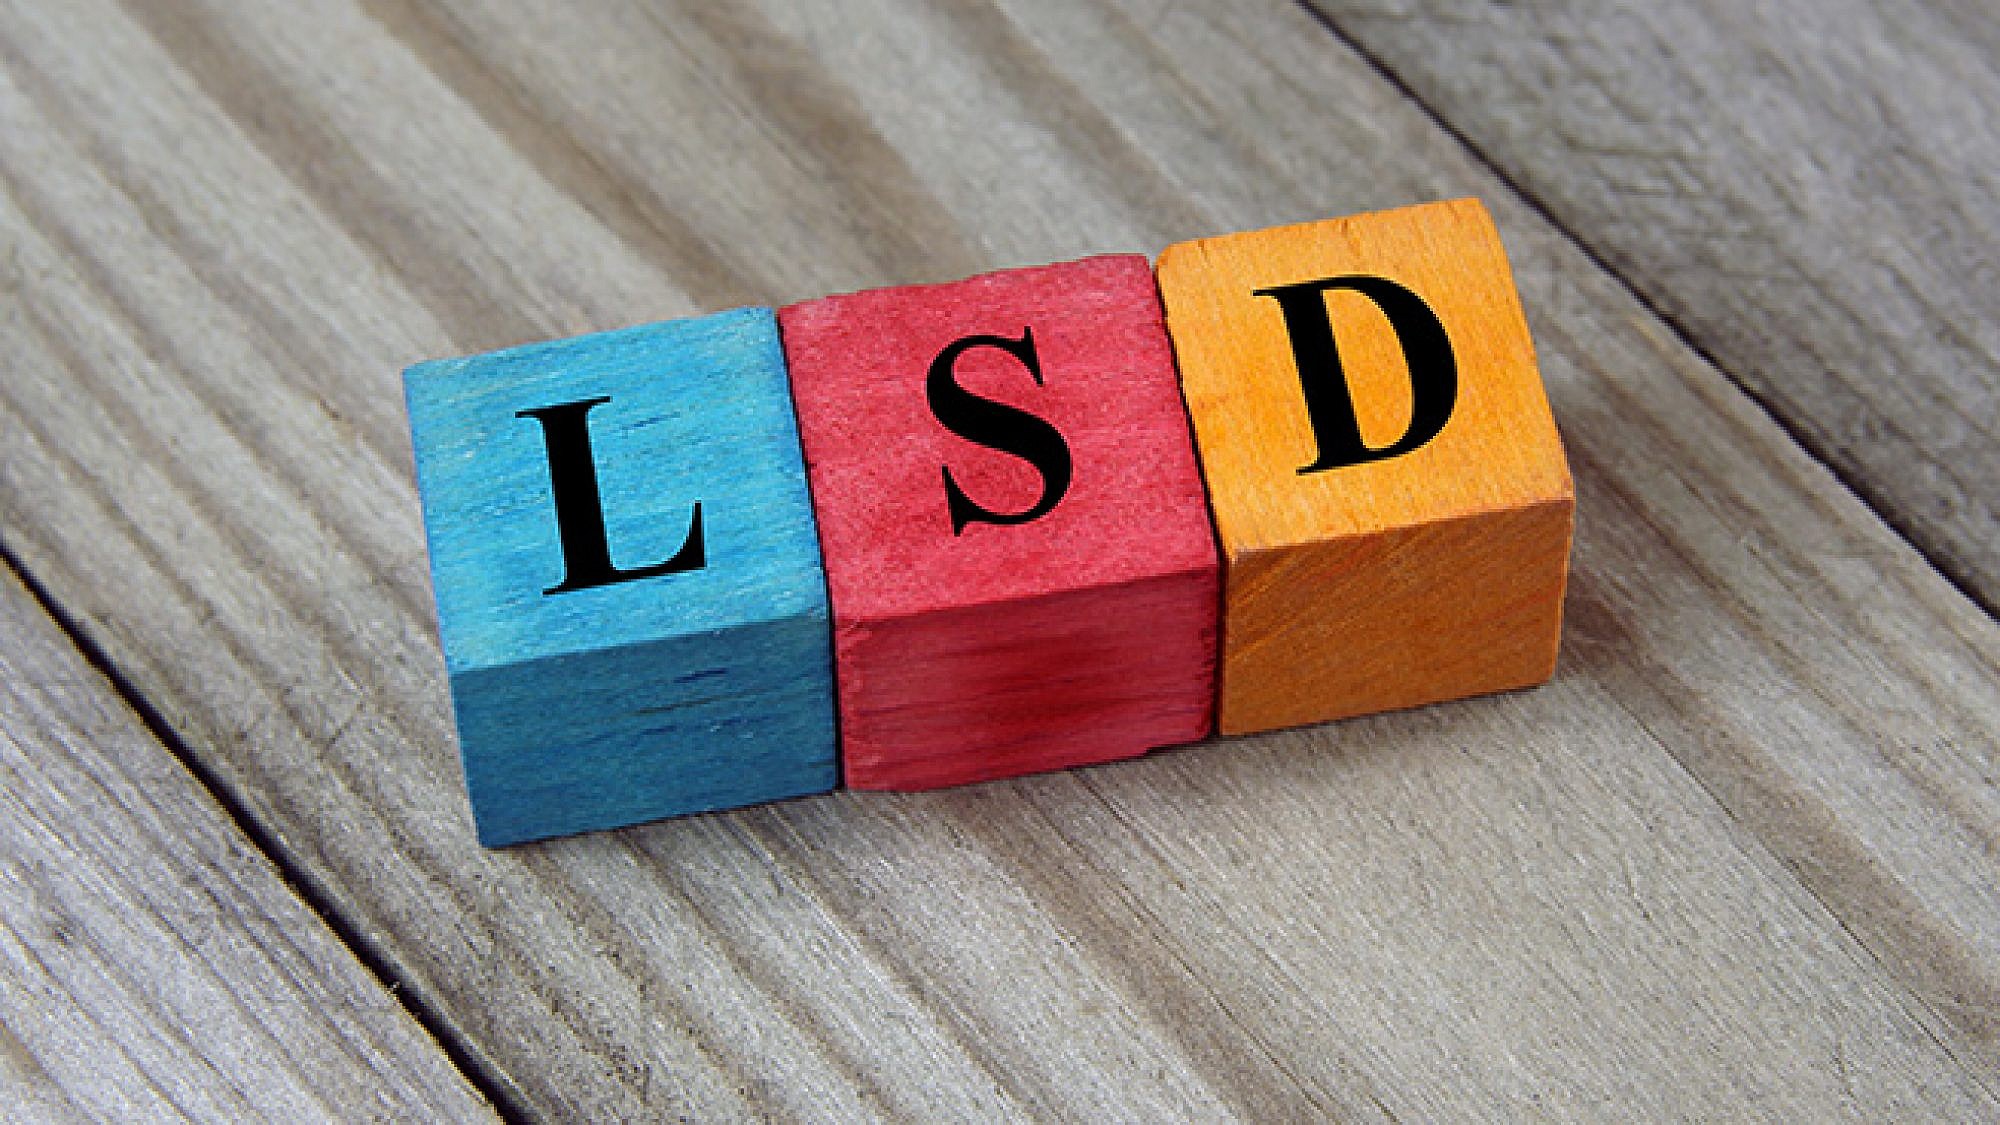 LSD, אסיד (צילום: שאטרסטוק)